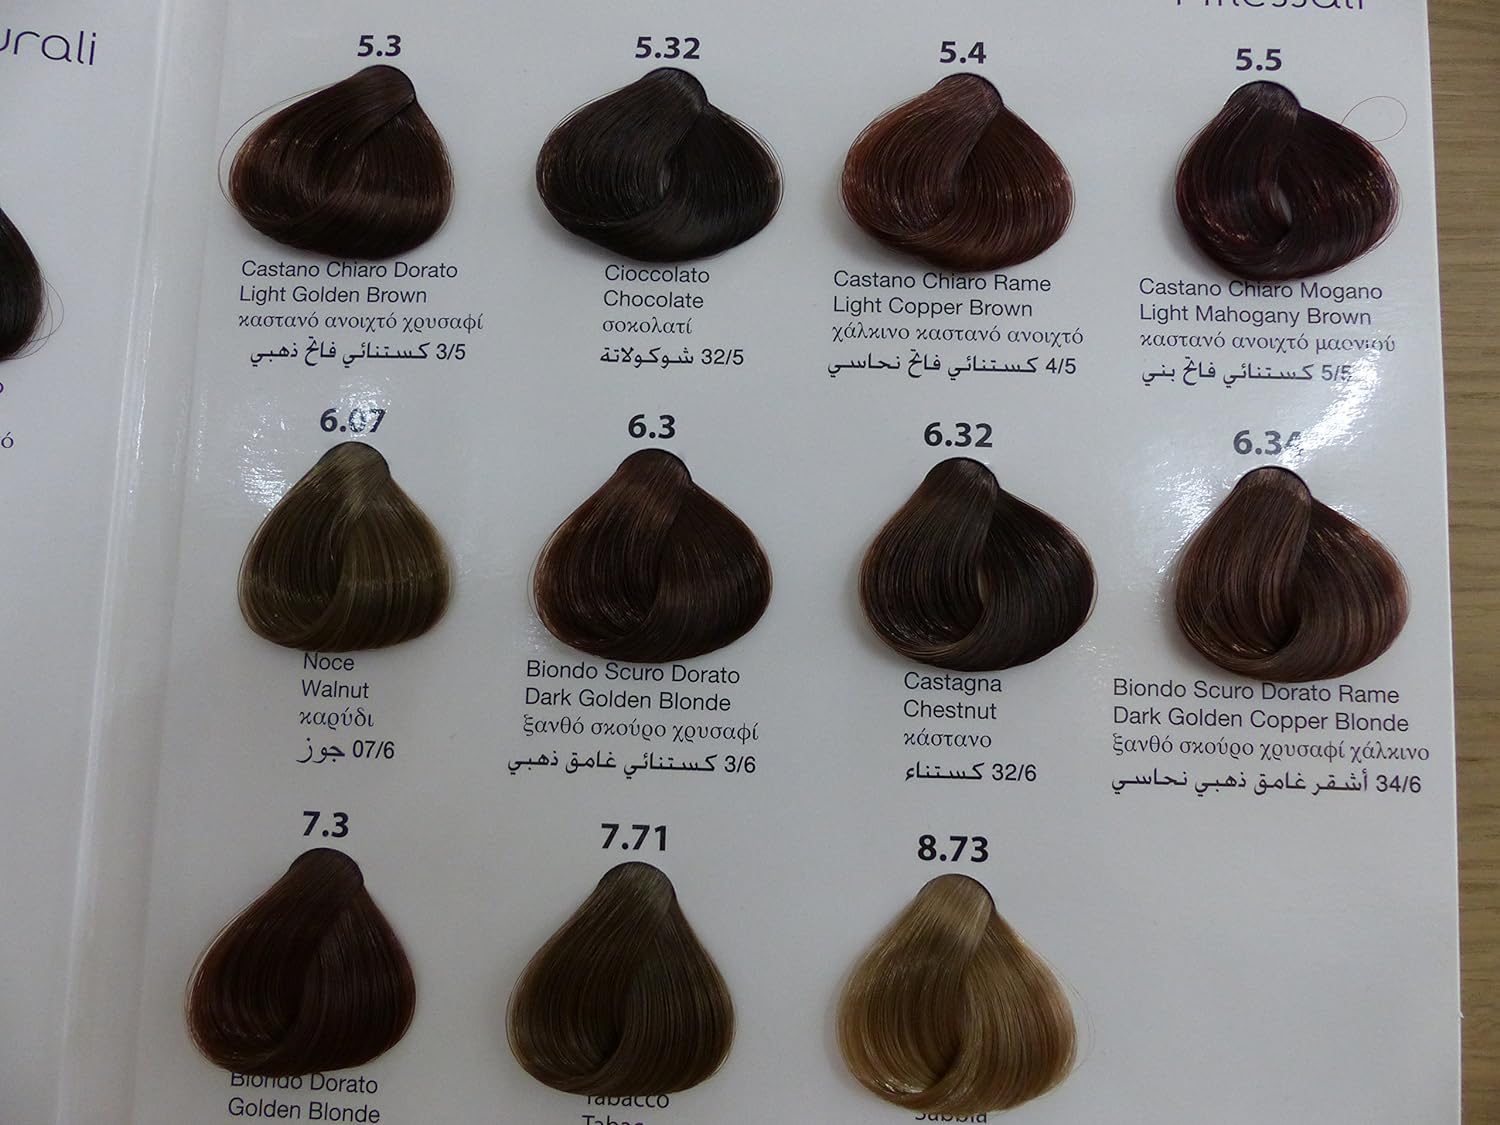 6.07 Tricolor Walnut Hair Color w/o ammonia & PPD - 196ml